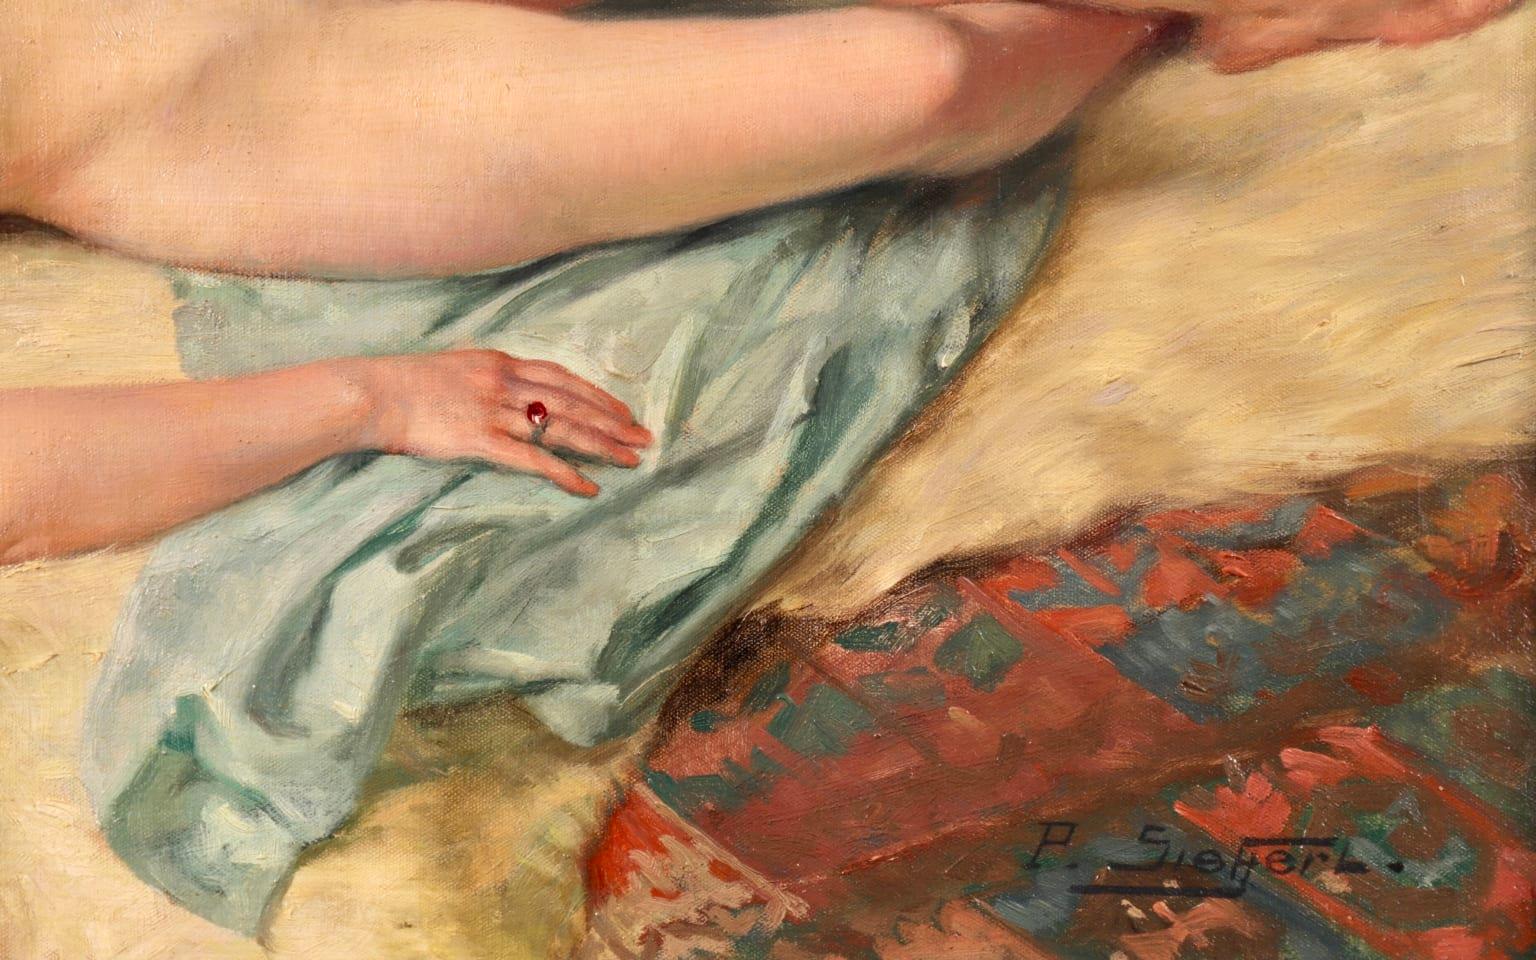 Nude Resting on Fur Rug - Impressionist Oil, Portrait of a Nude by Paul Sieffert 2